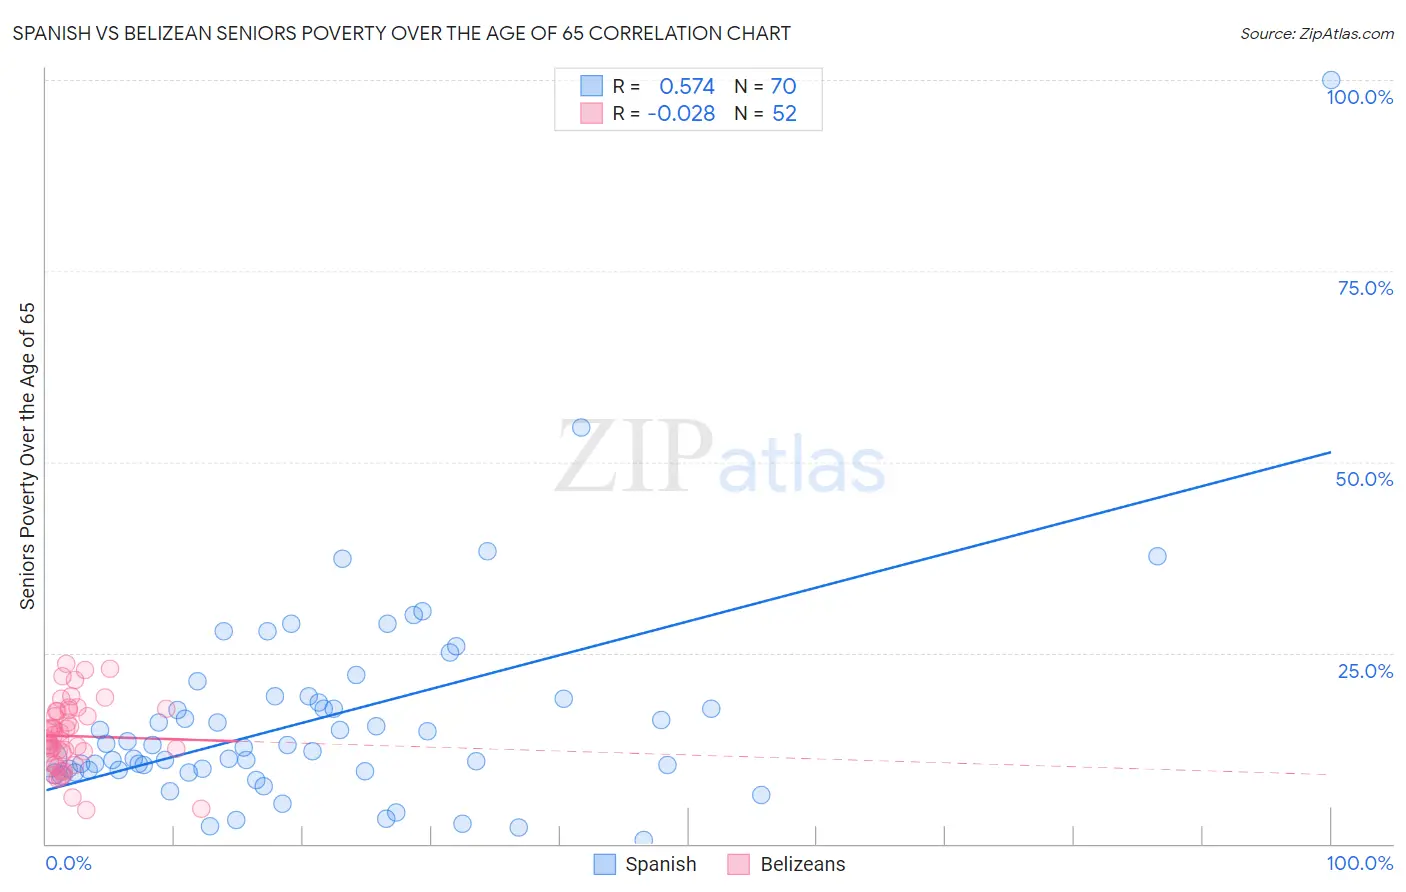 Spanish vs Belizean Seniors Poverty Over the Age of 65